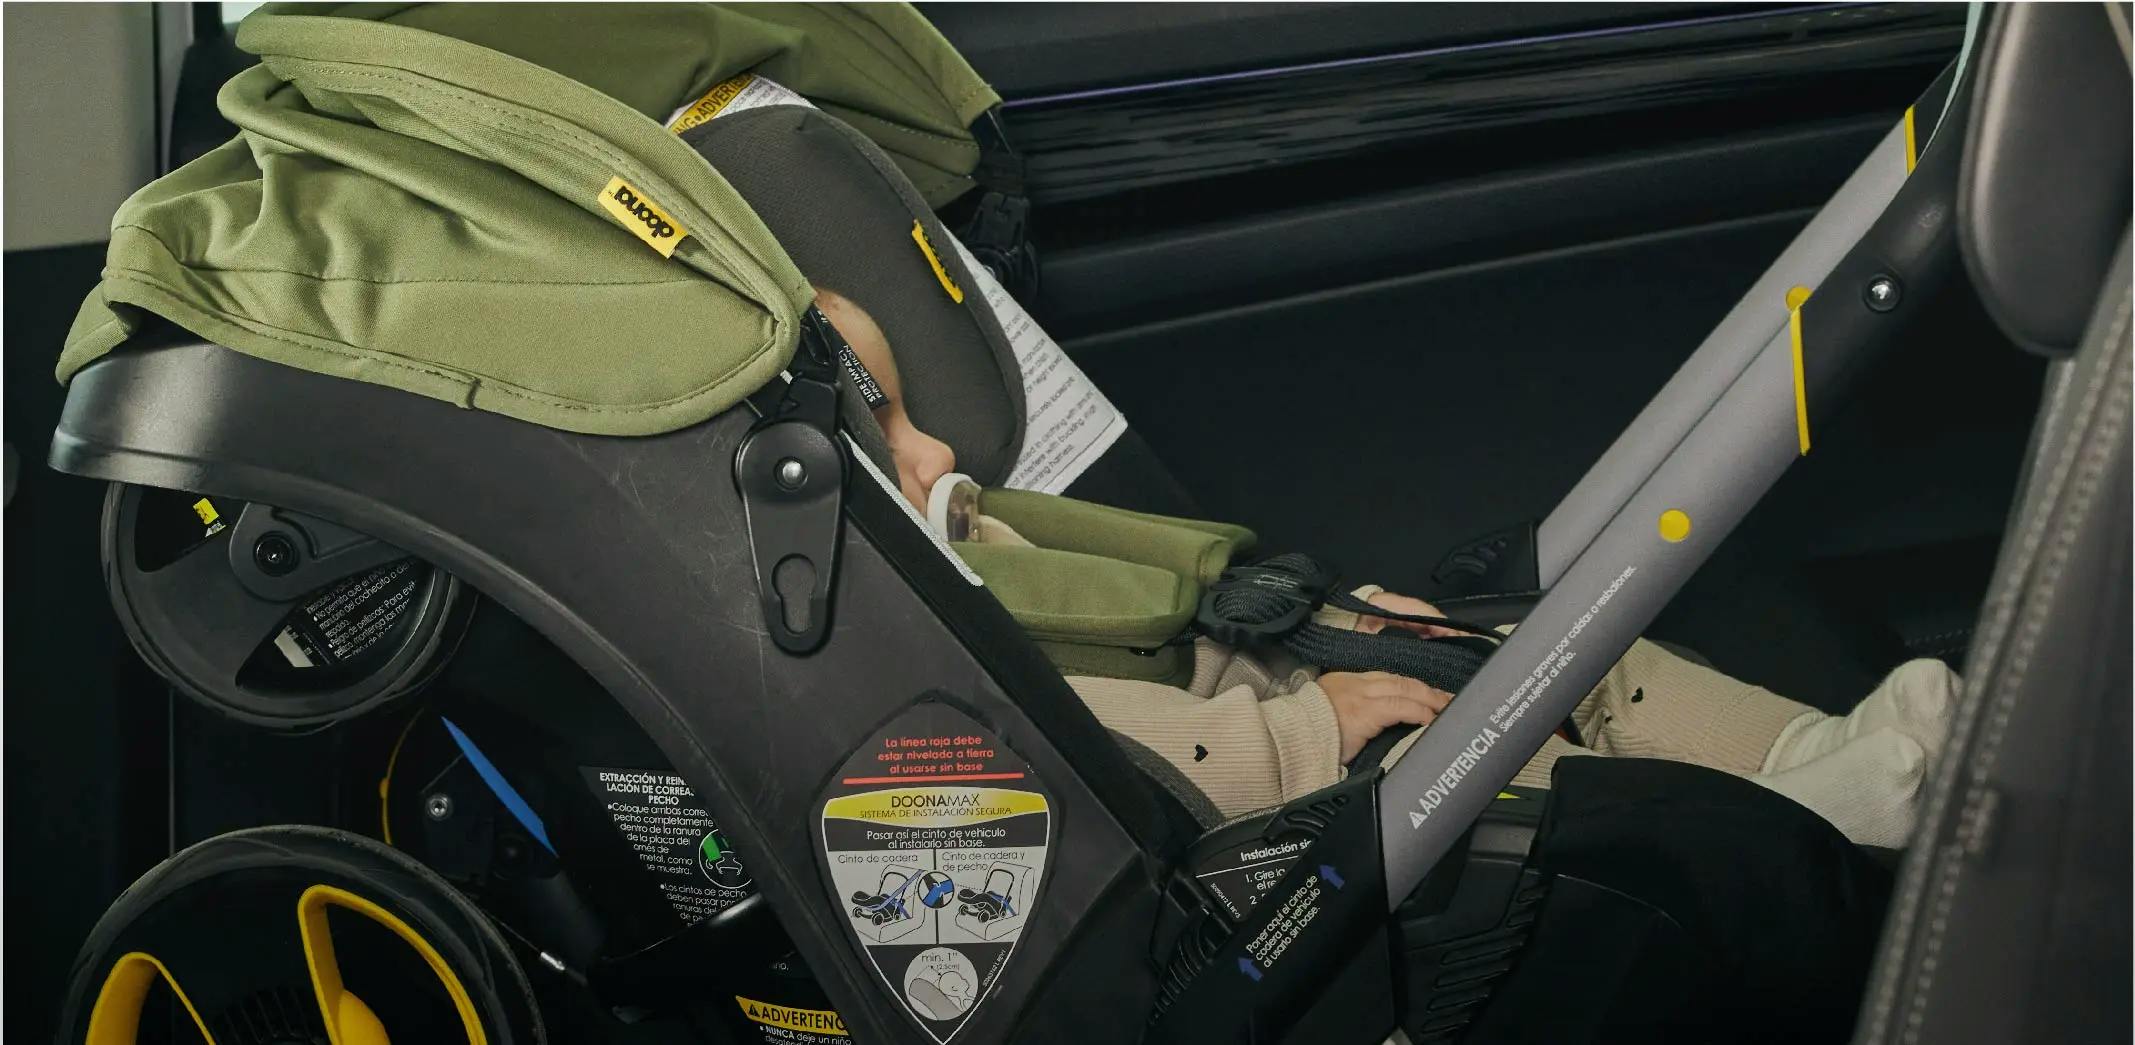 The Safest Position For An Infant Car Seat